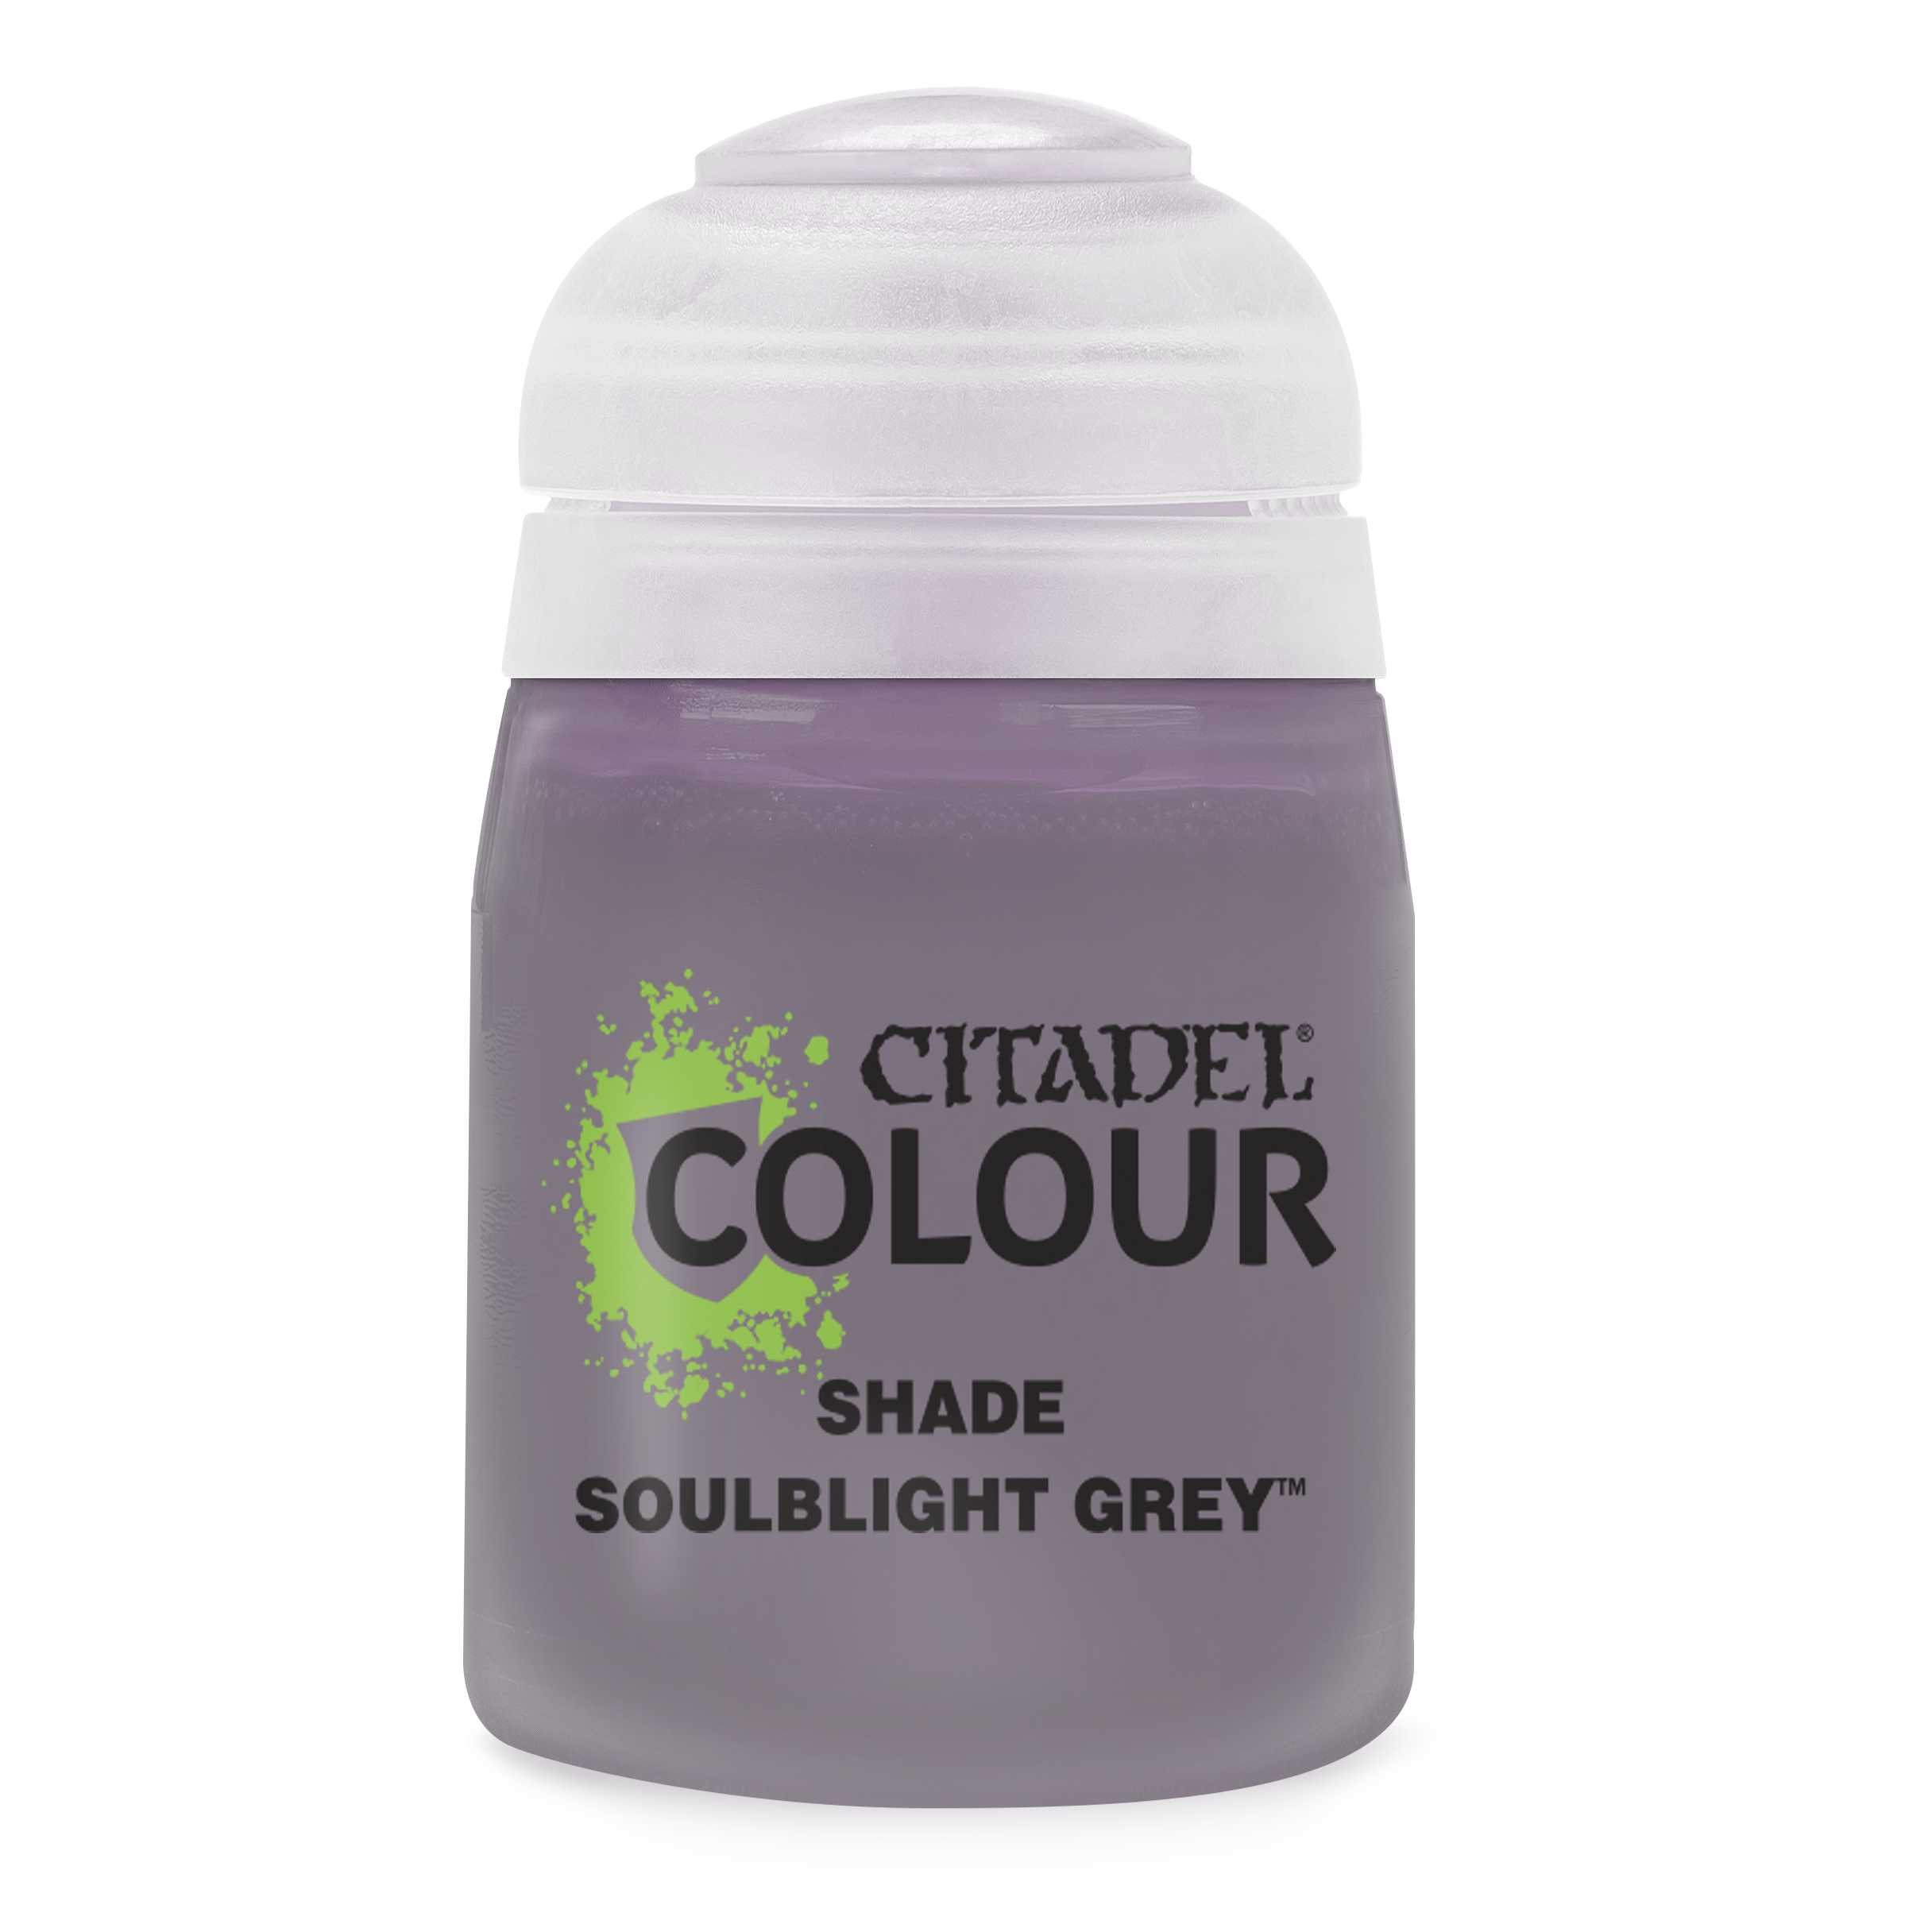 Soulblight Grey Citadel Shade Paint | Lots Moore NSW